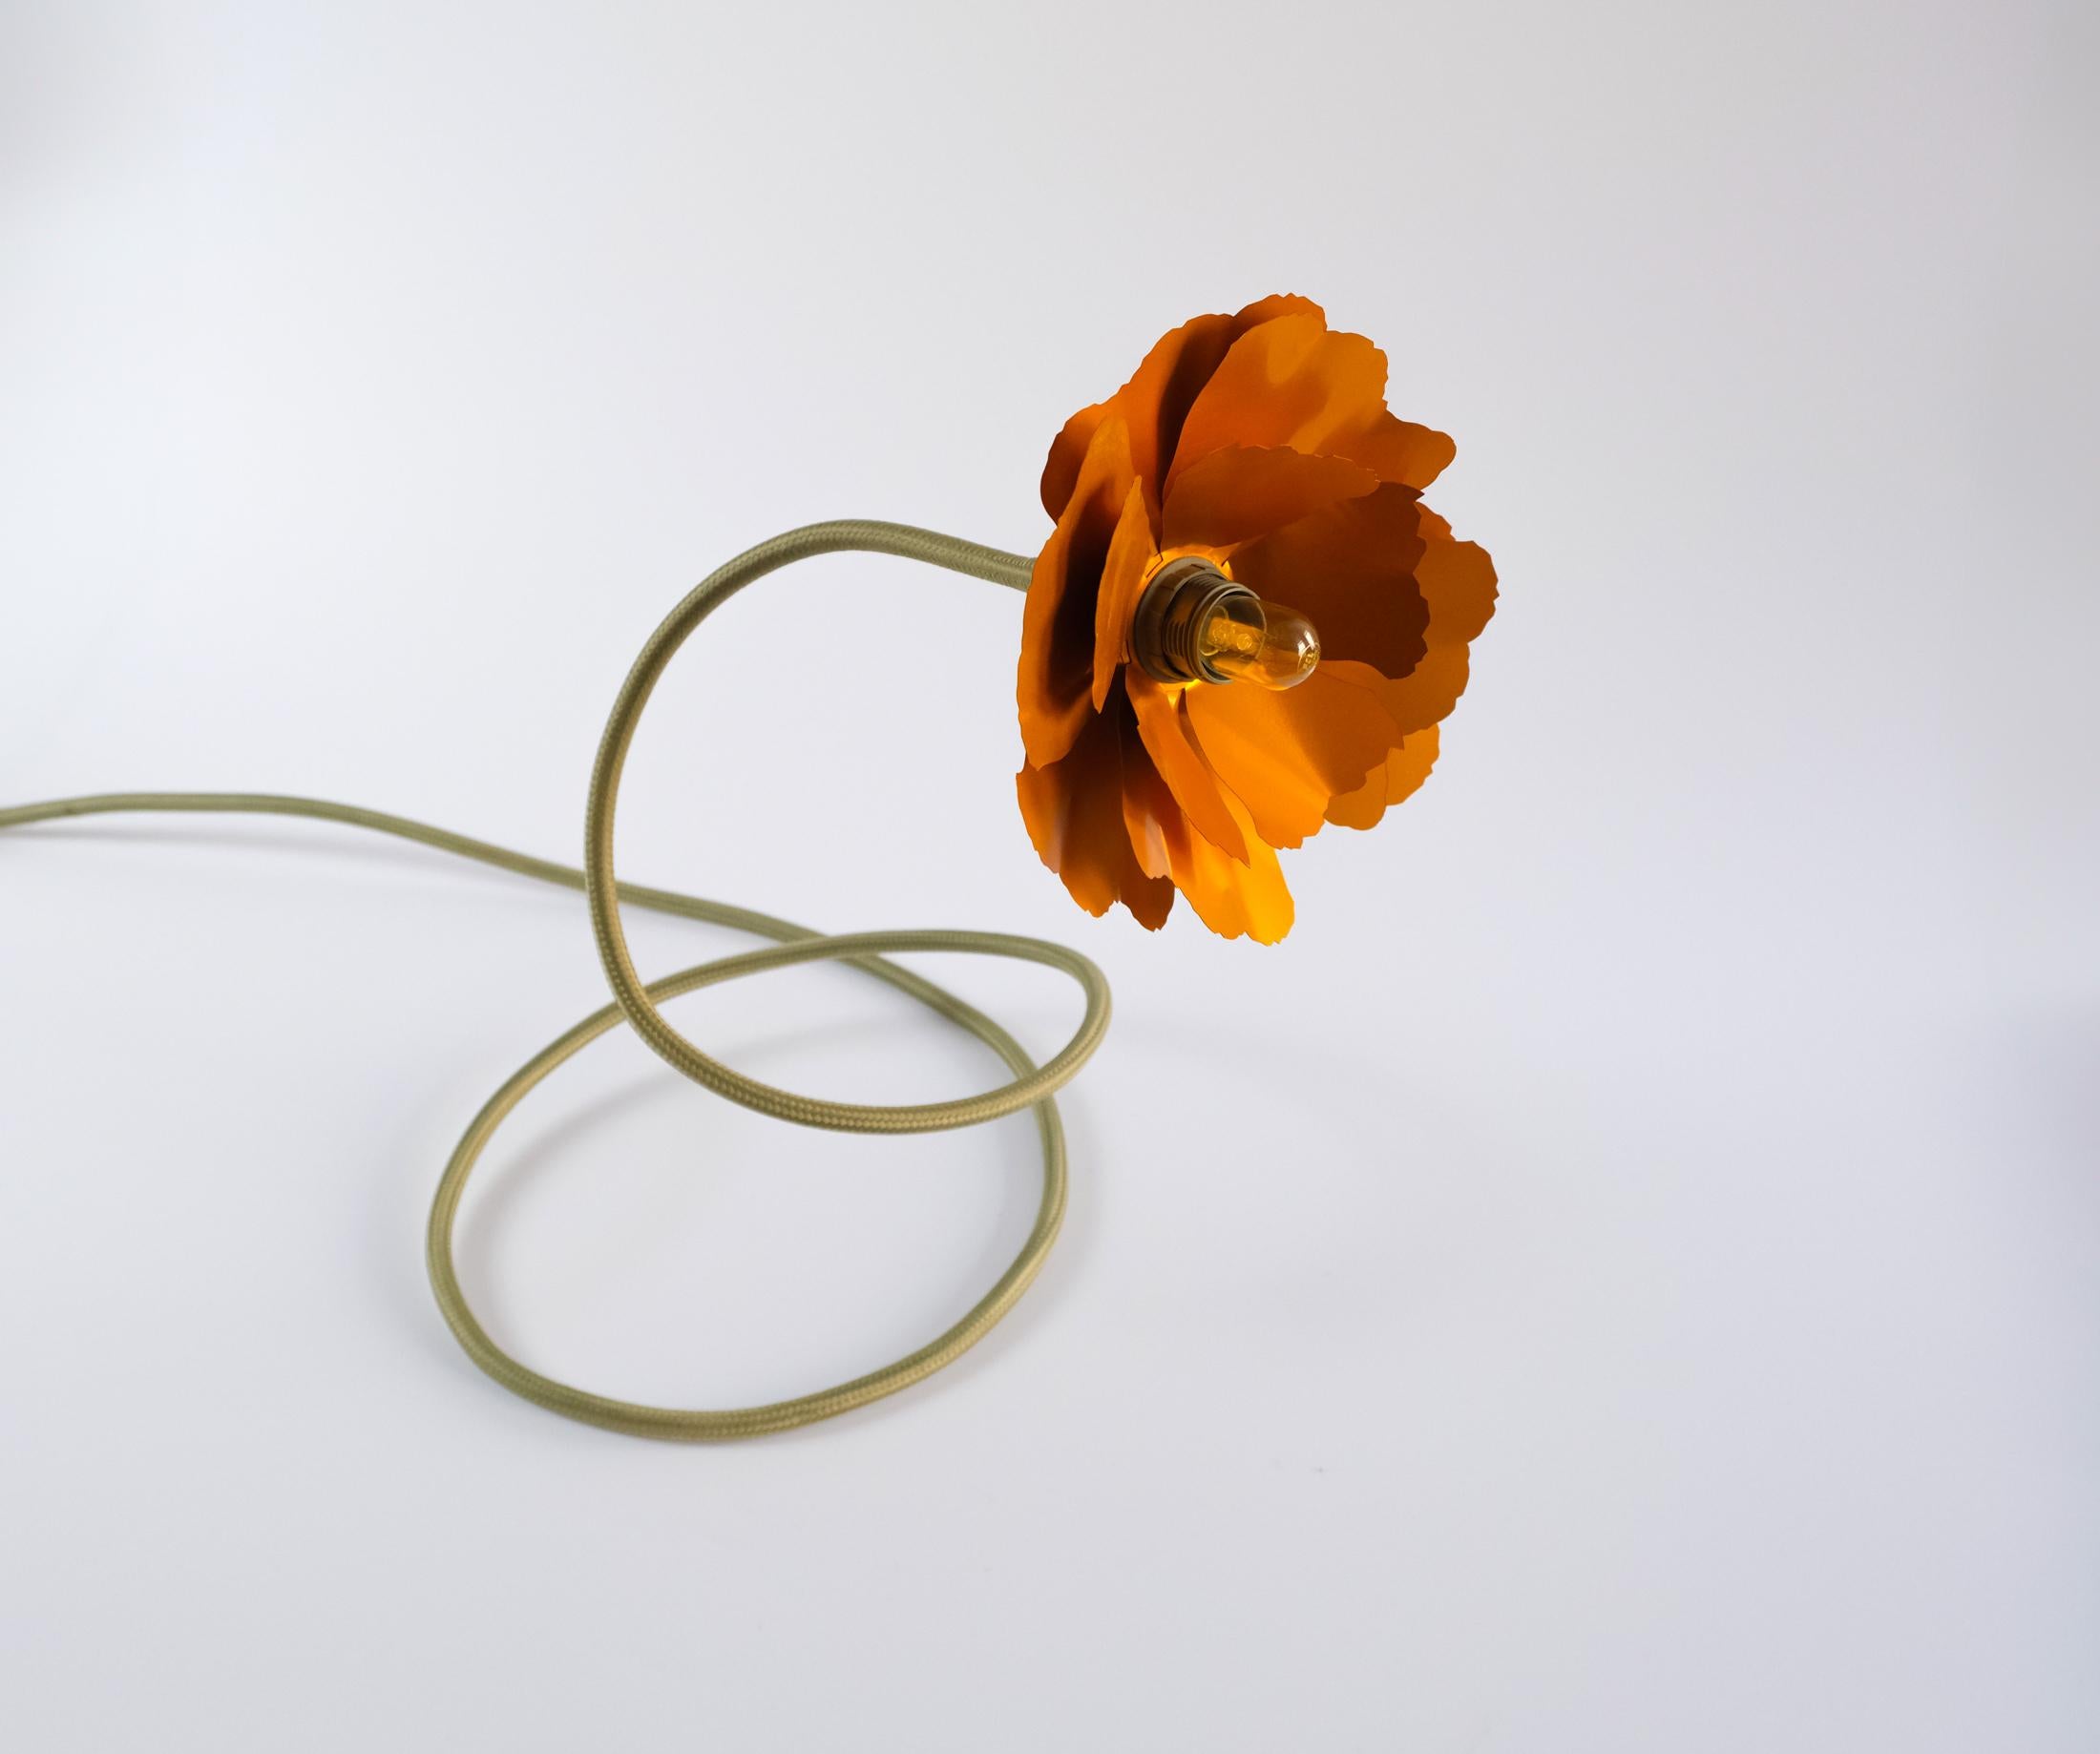 Contemporary Helena Christensen's Flexible Flower Lamp for Habitat “V.I.P” Collection, 2004 For Sale